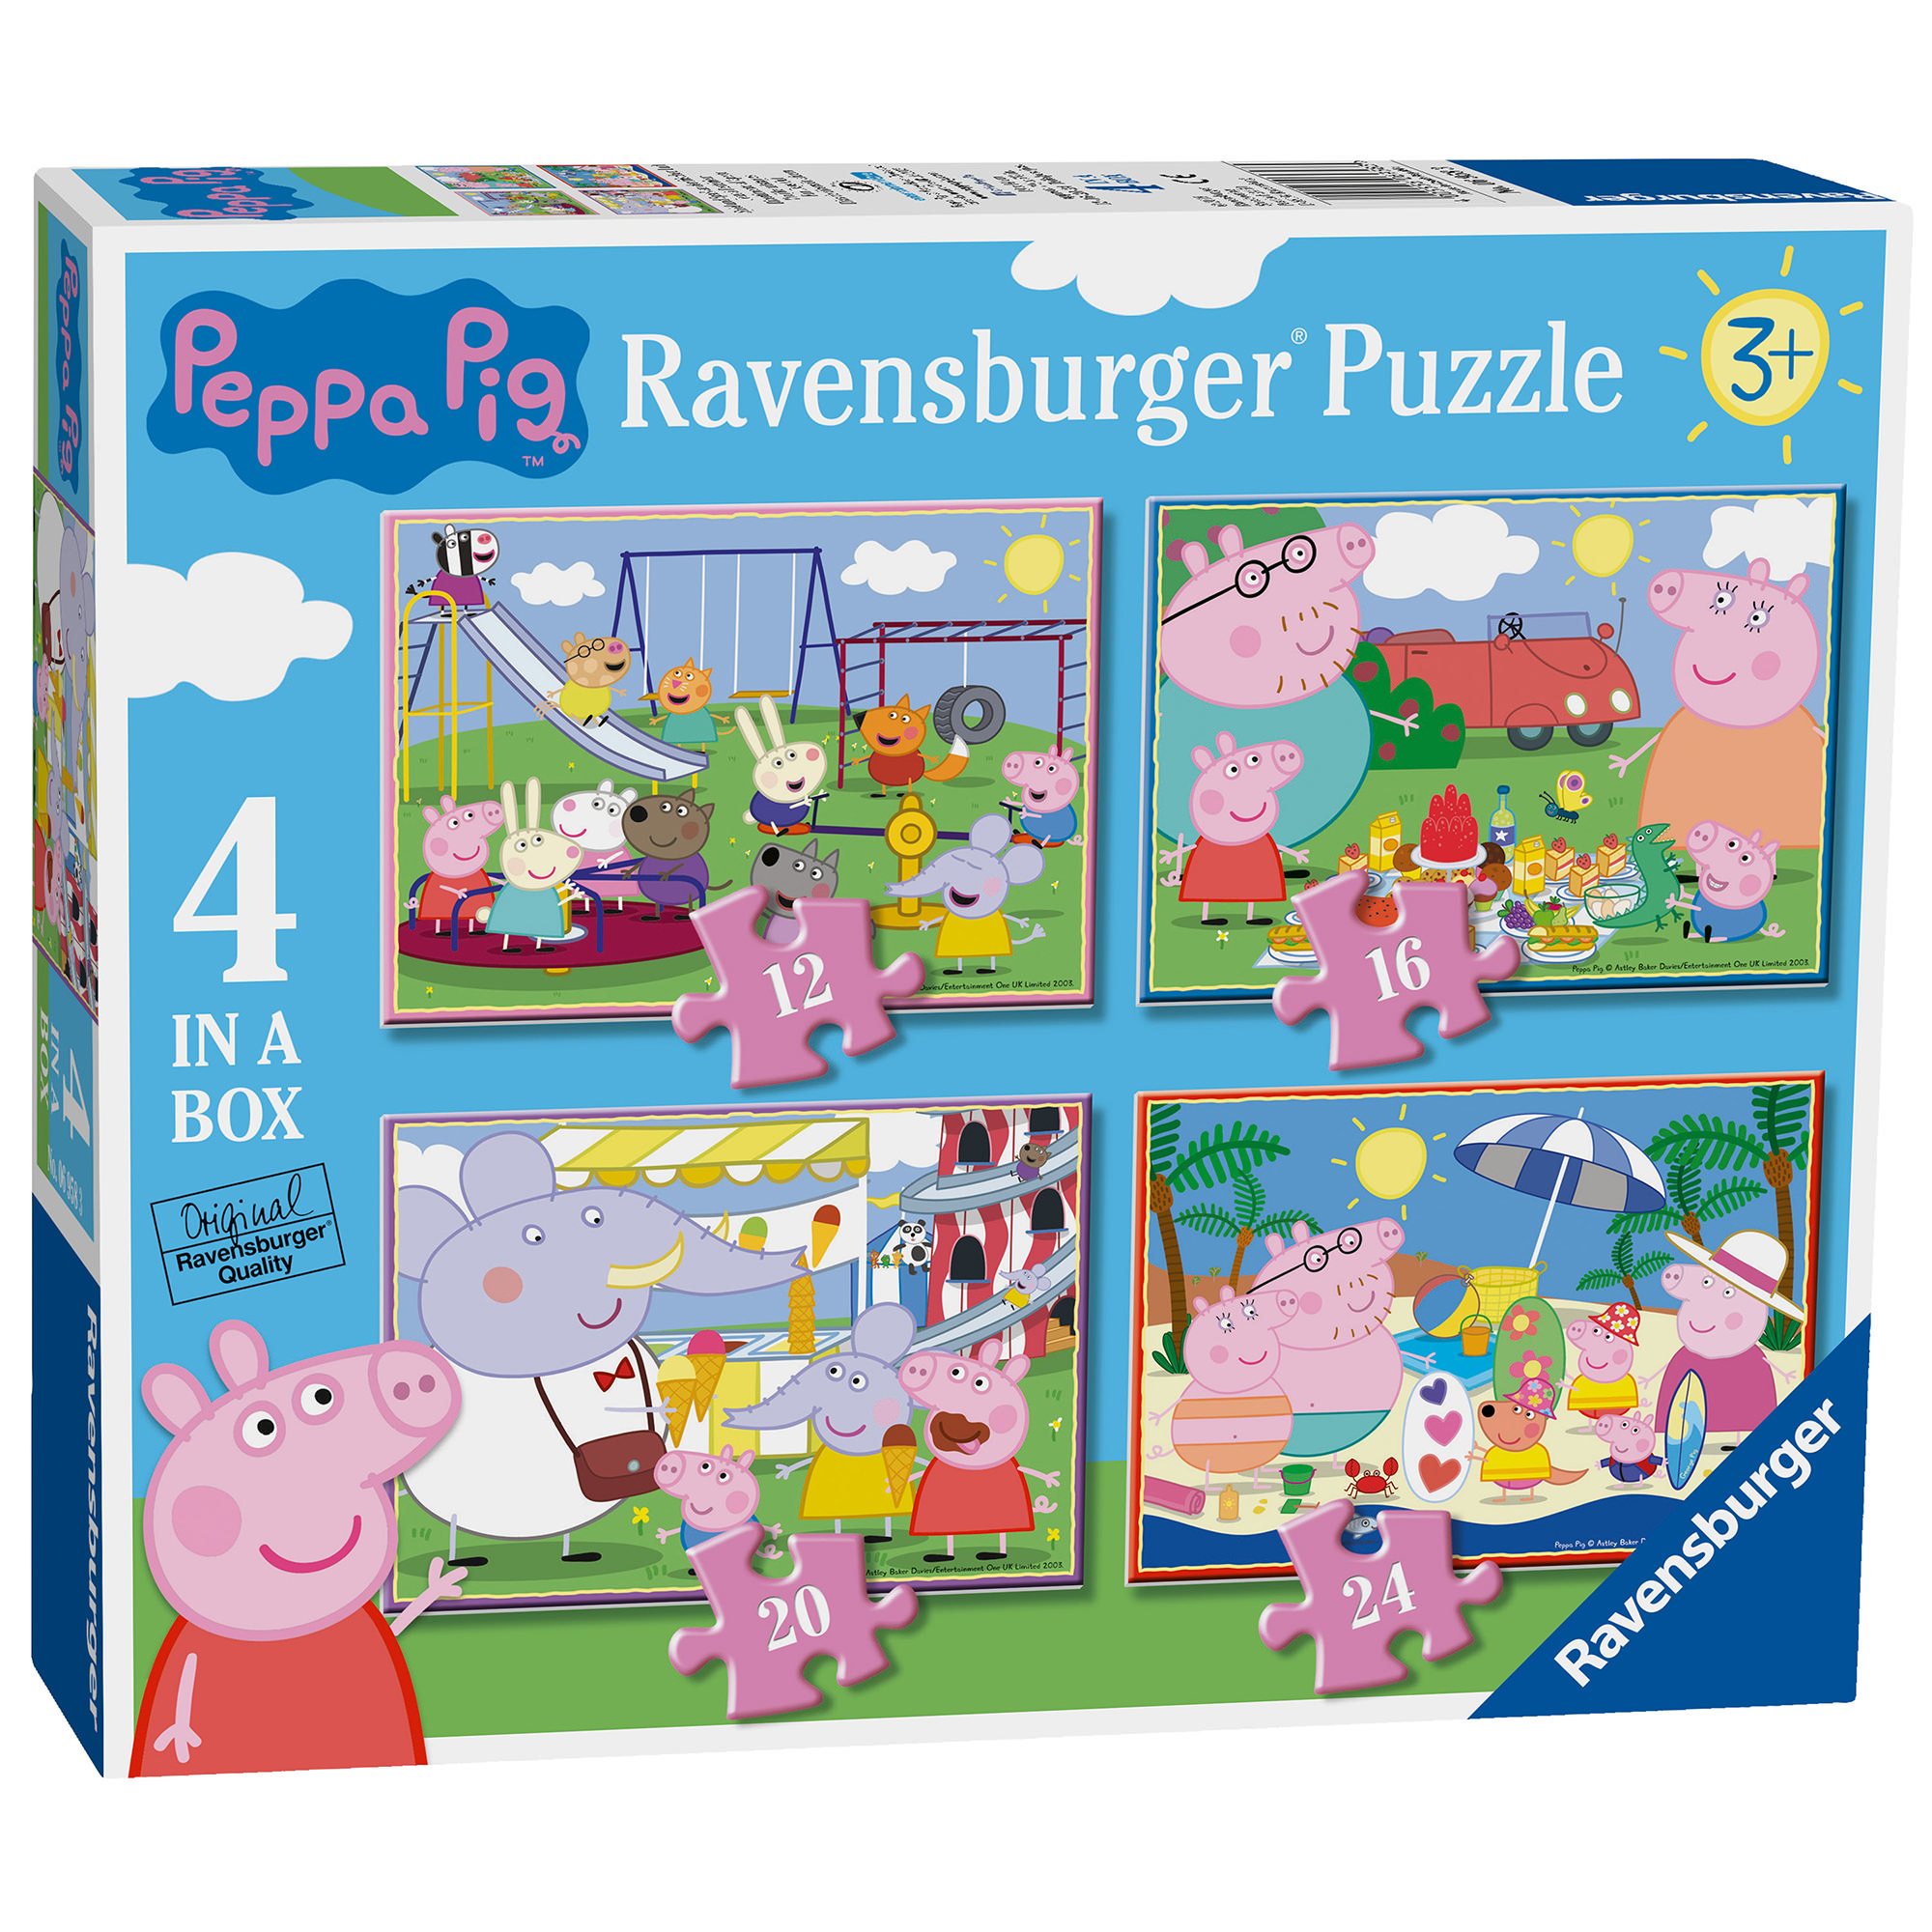 Ravensburger Peppa Pig Boîte 4 in Jigsaw Puzzles pour... 12, 16, 20, 24 PIECES environ 10.16 cm 